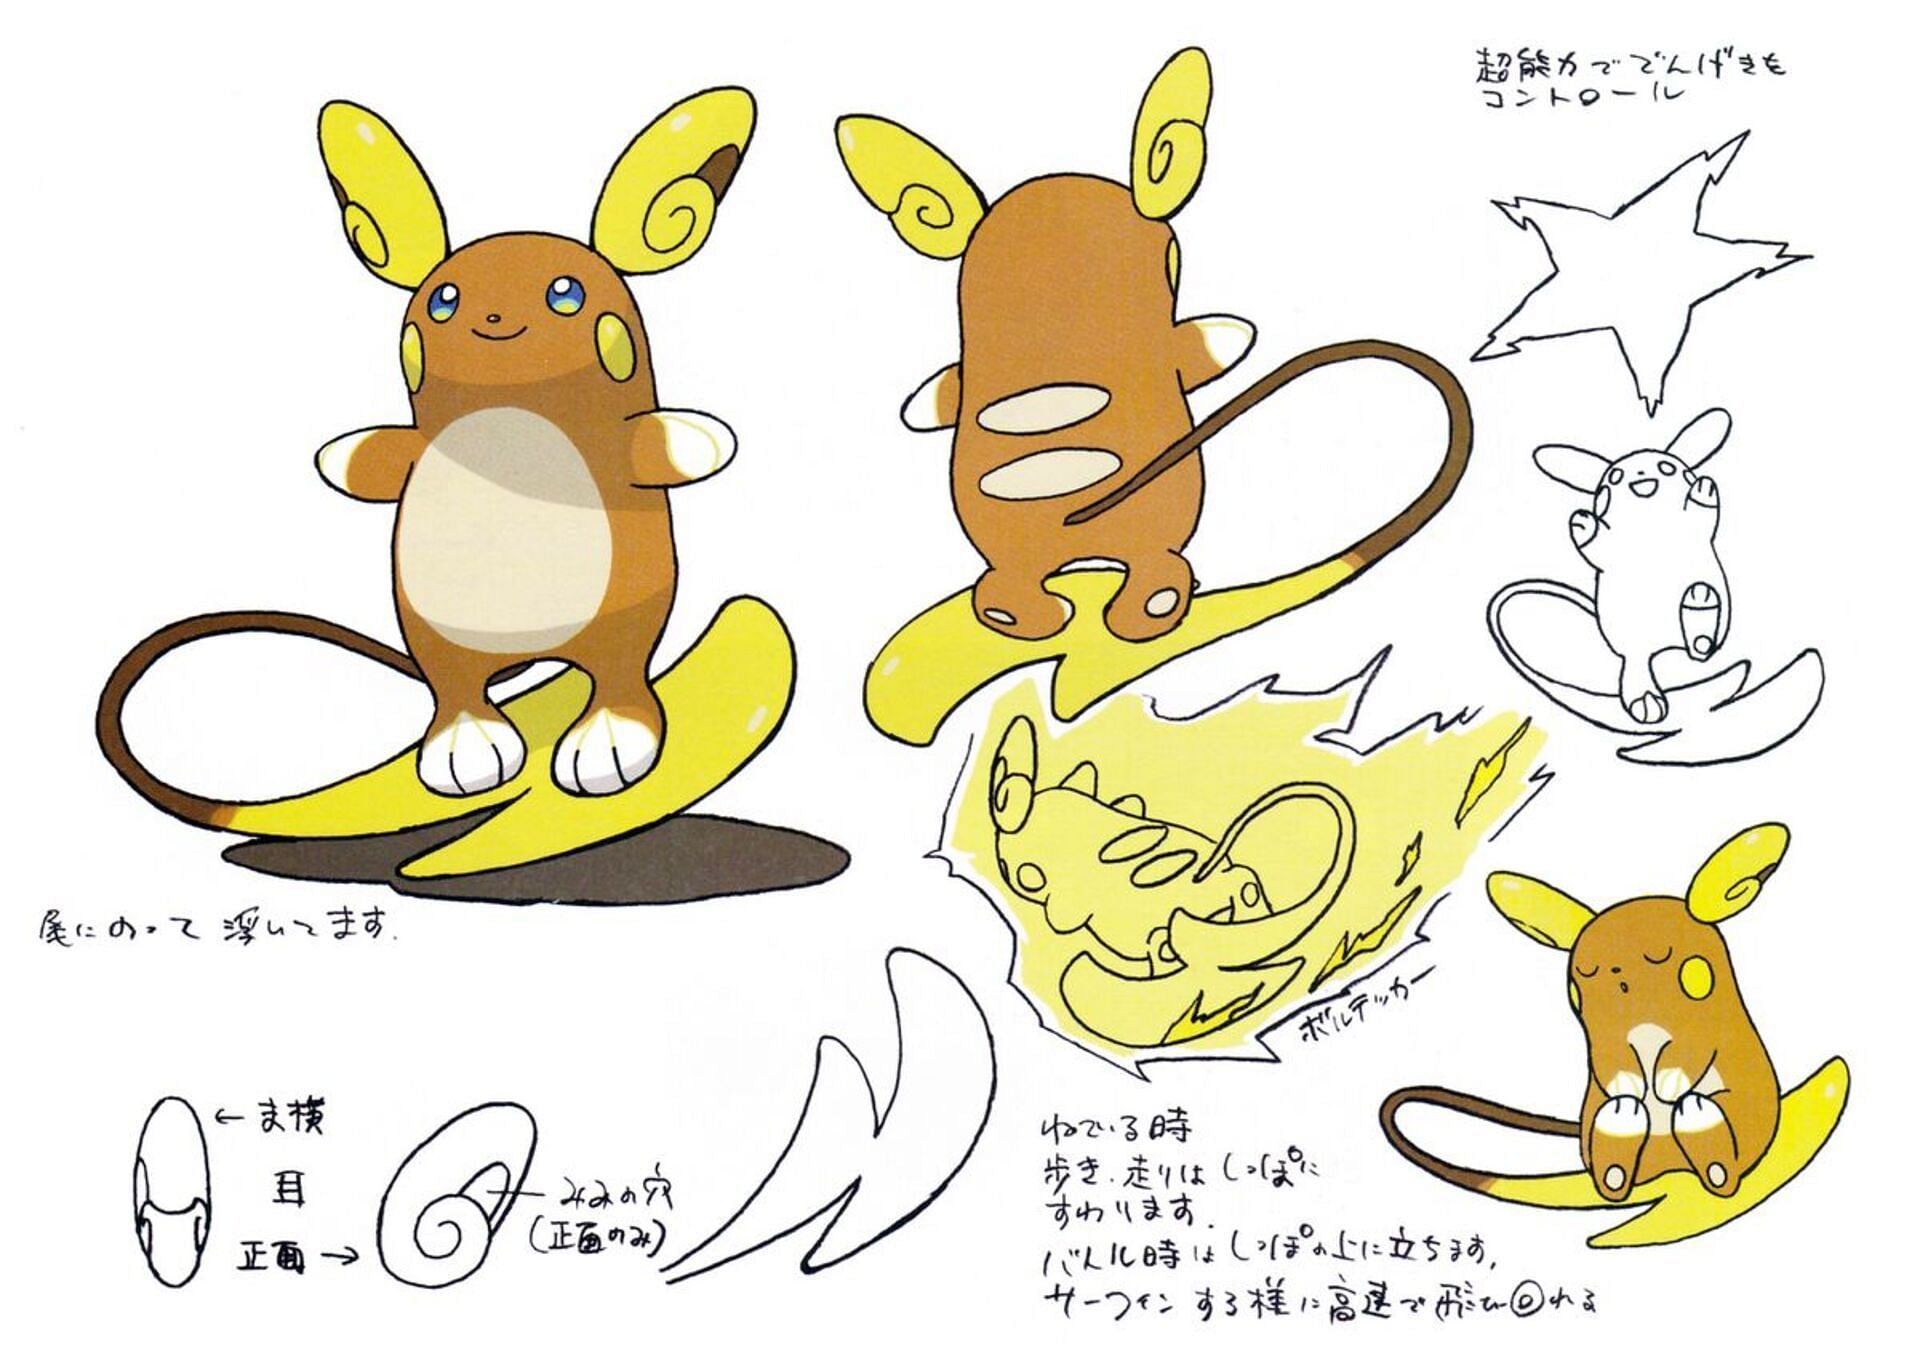 Alolan Raichu concept art (Image via The Pokemon Company)